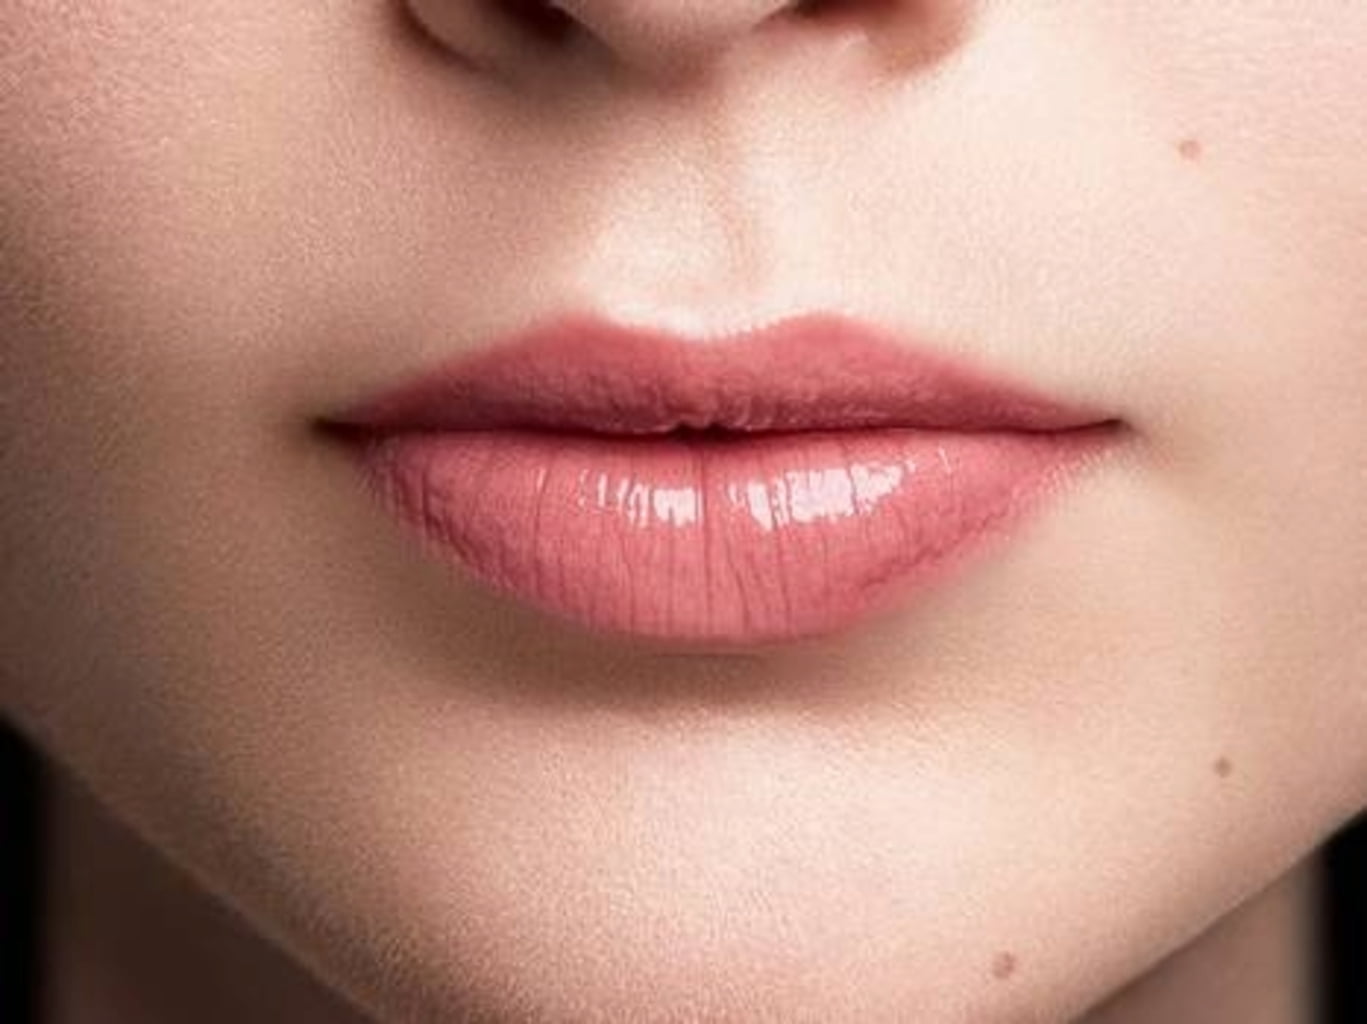 NYX Professional Makeup Soft Matte Lip Cream - oh feliz Onlineshop Portugal